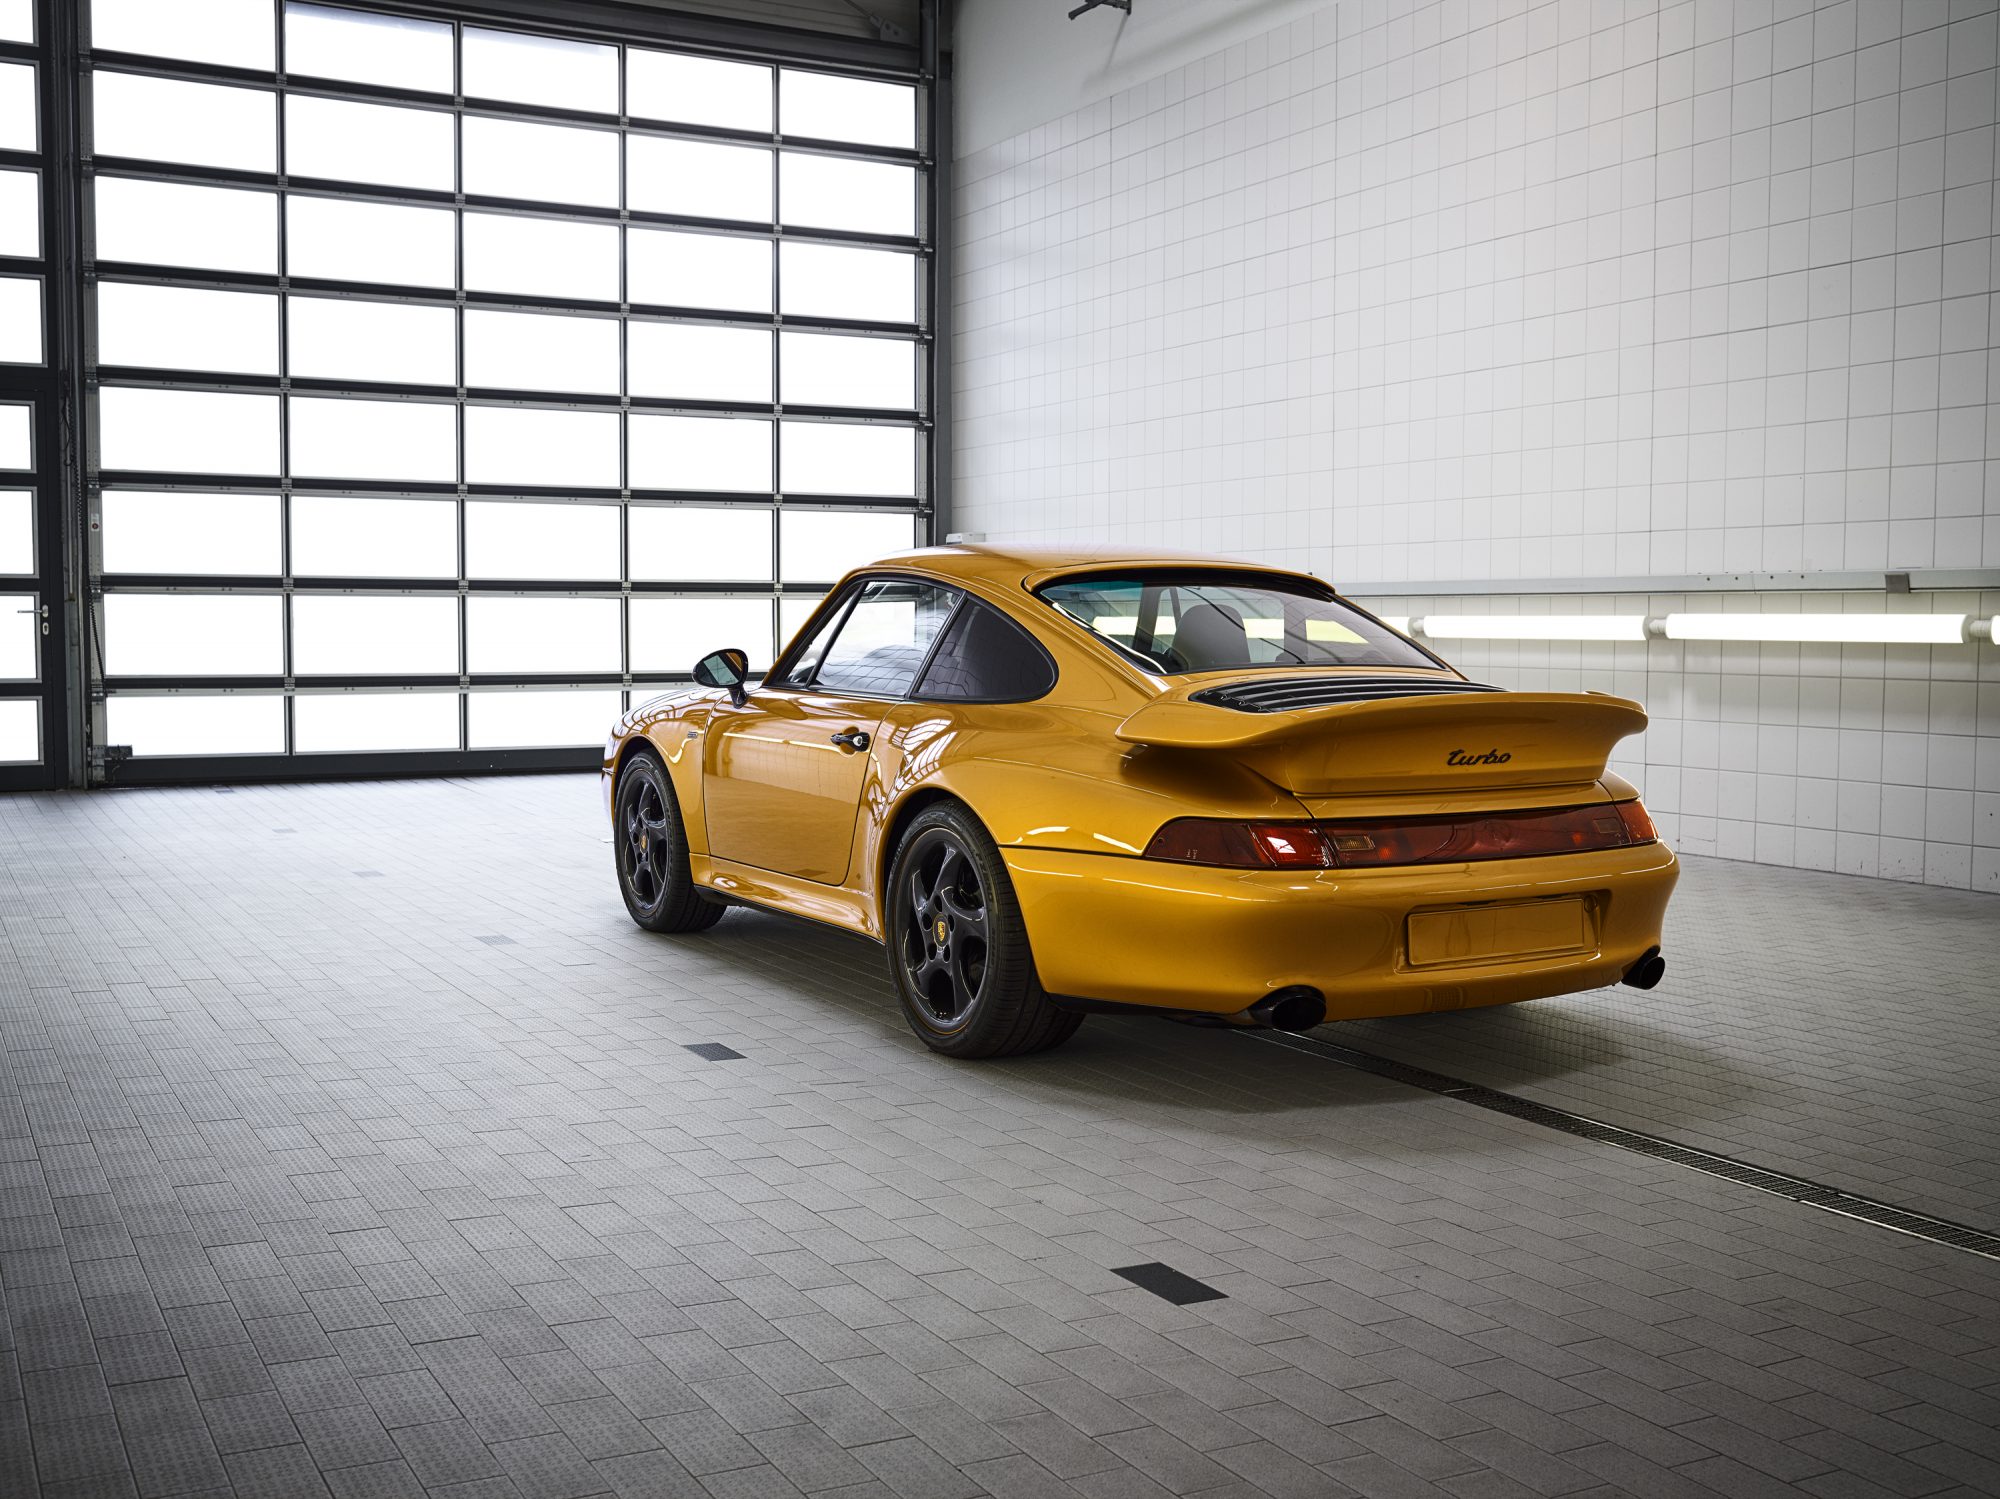 Porsche-993-Turbo-S-Project-Gold-1.jpg